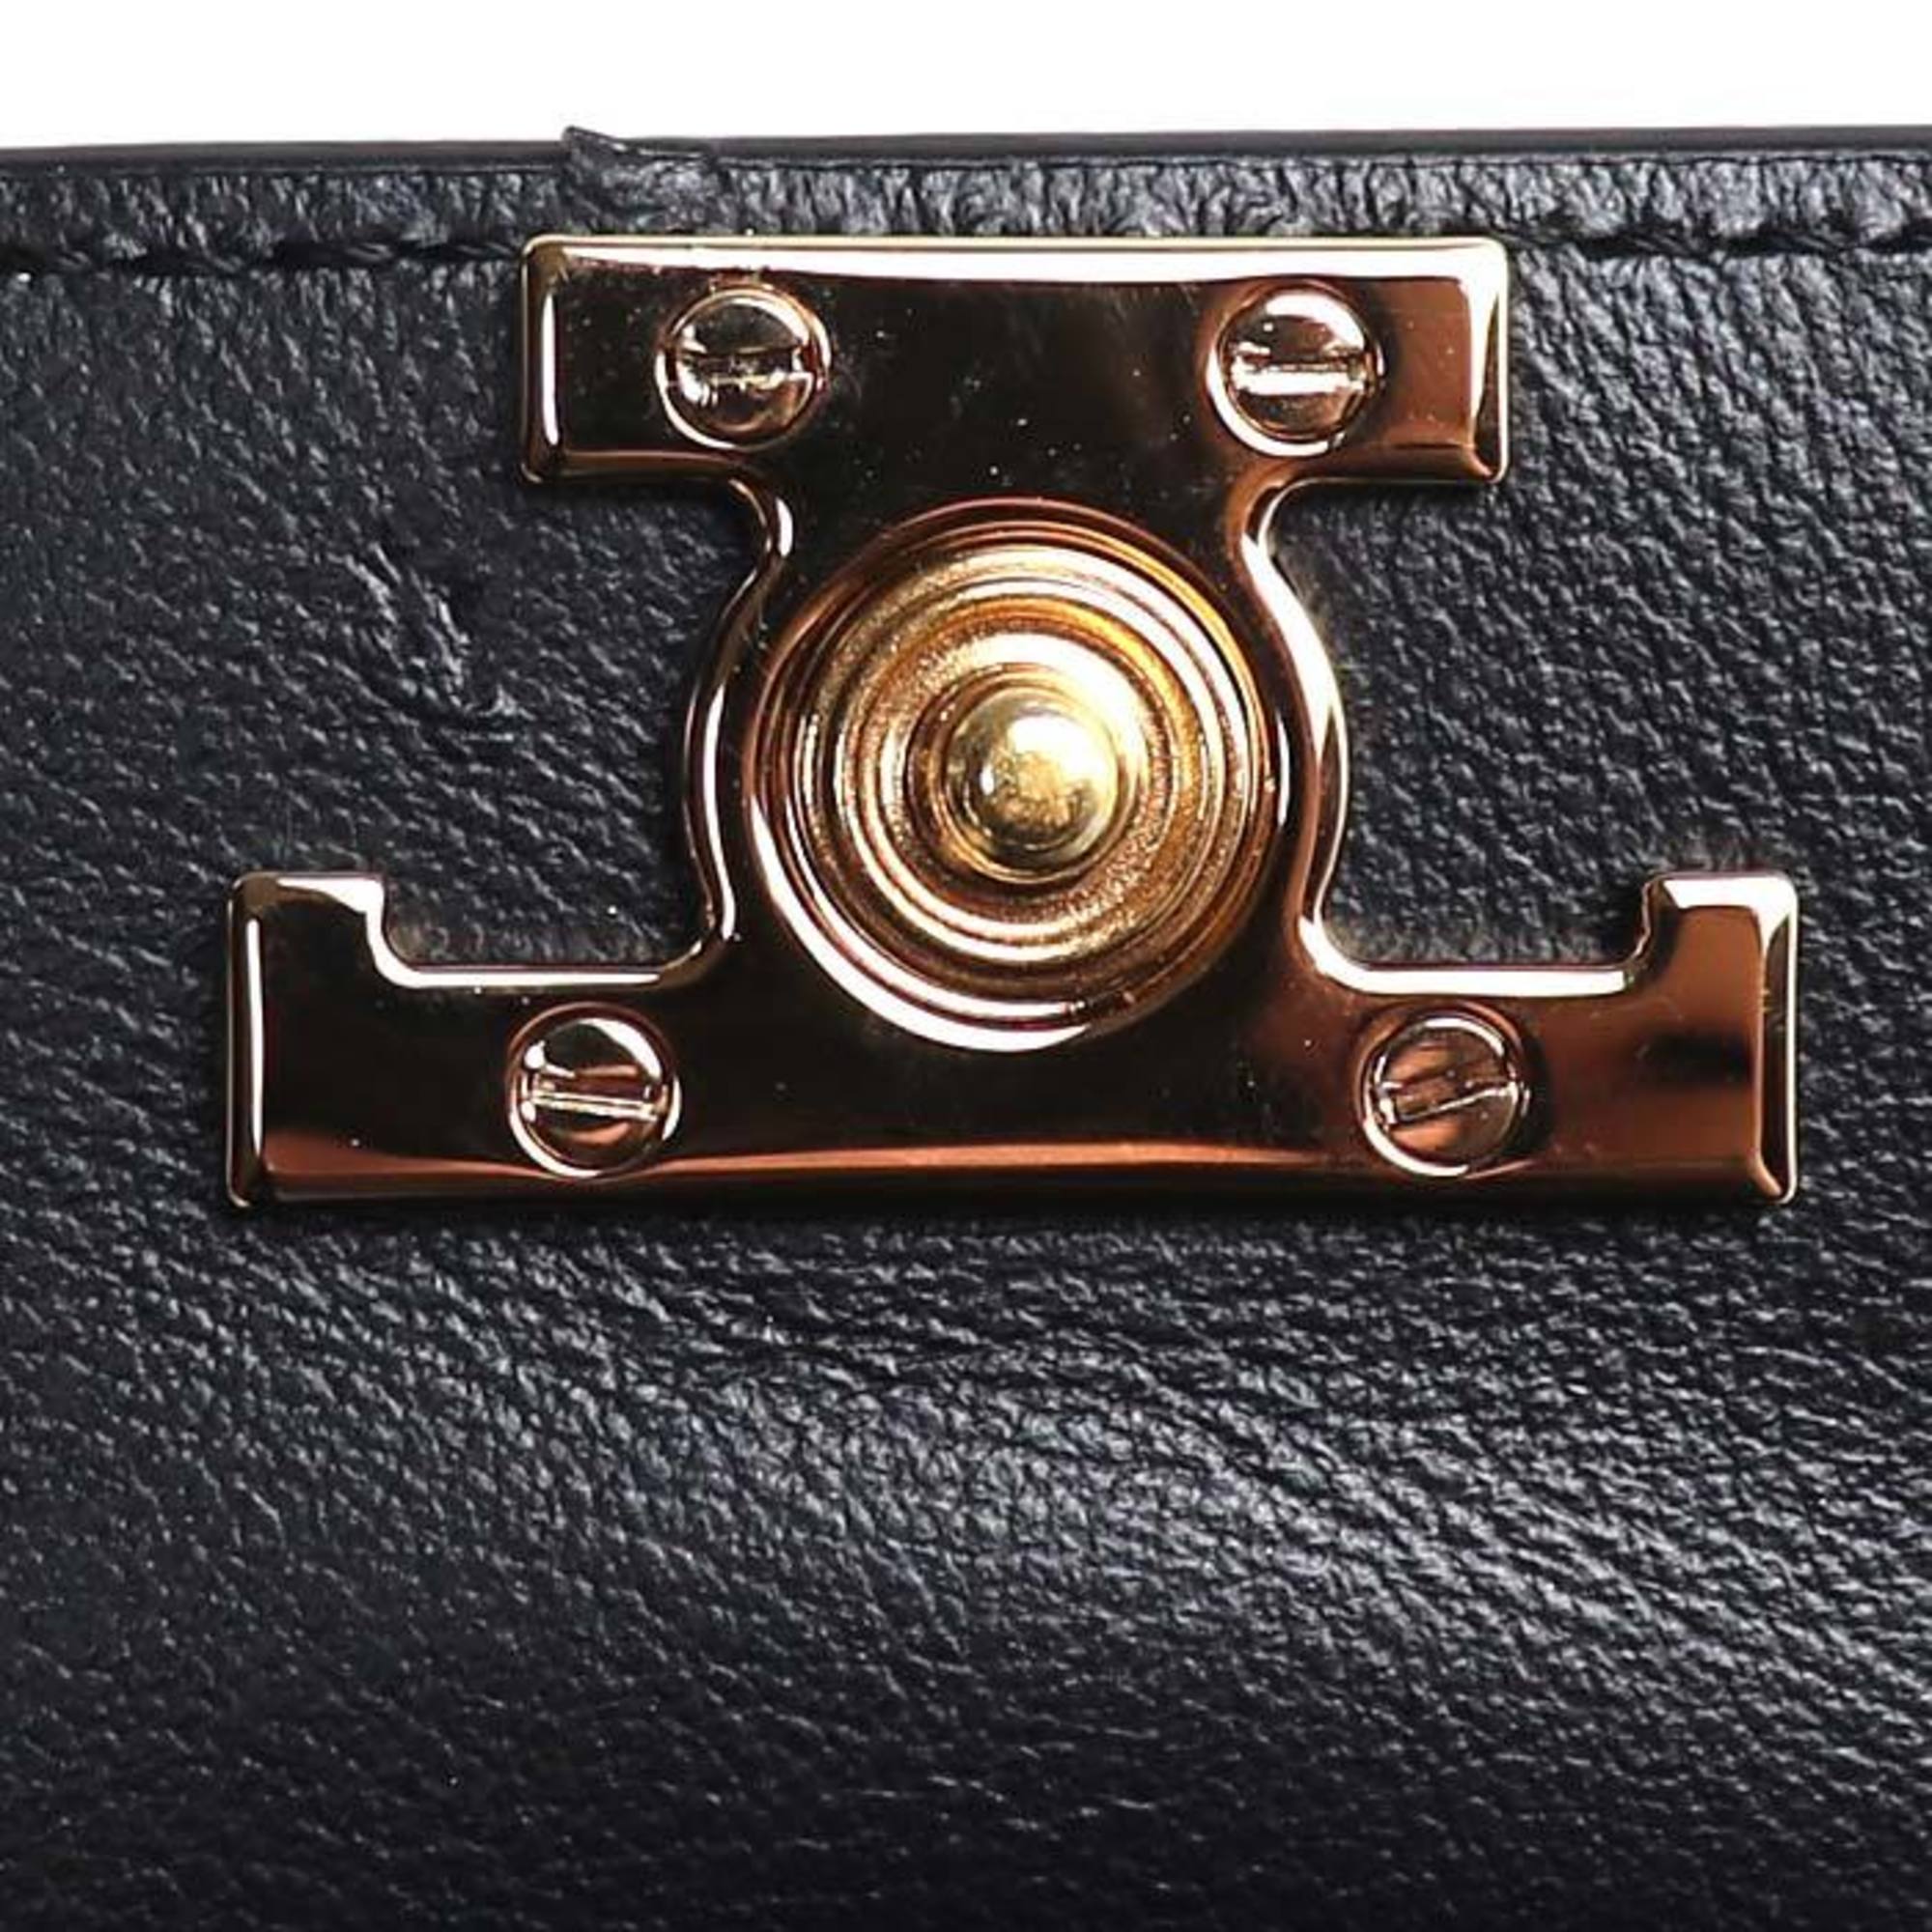 TOD'S T Timeless Leather Wallet Bi-fold Black XAWTSVB9100RORB999 Women's